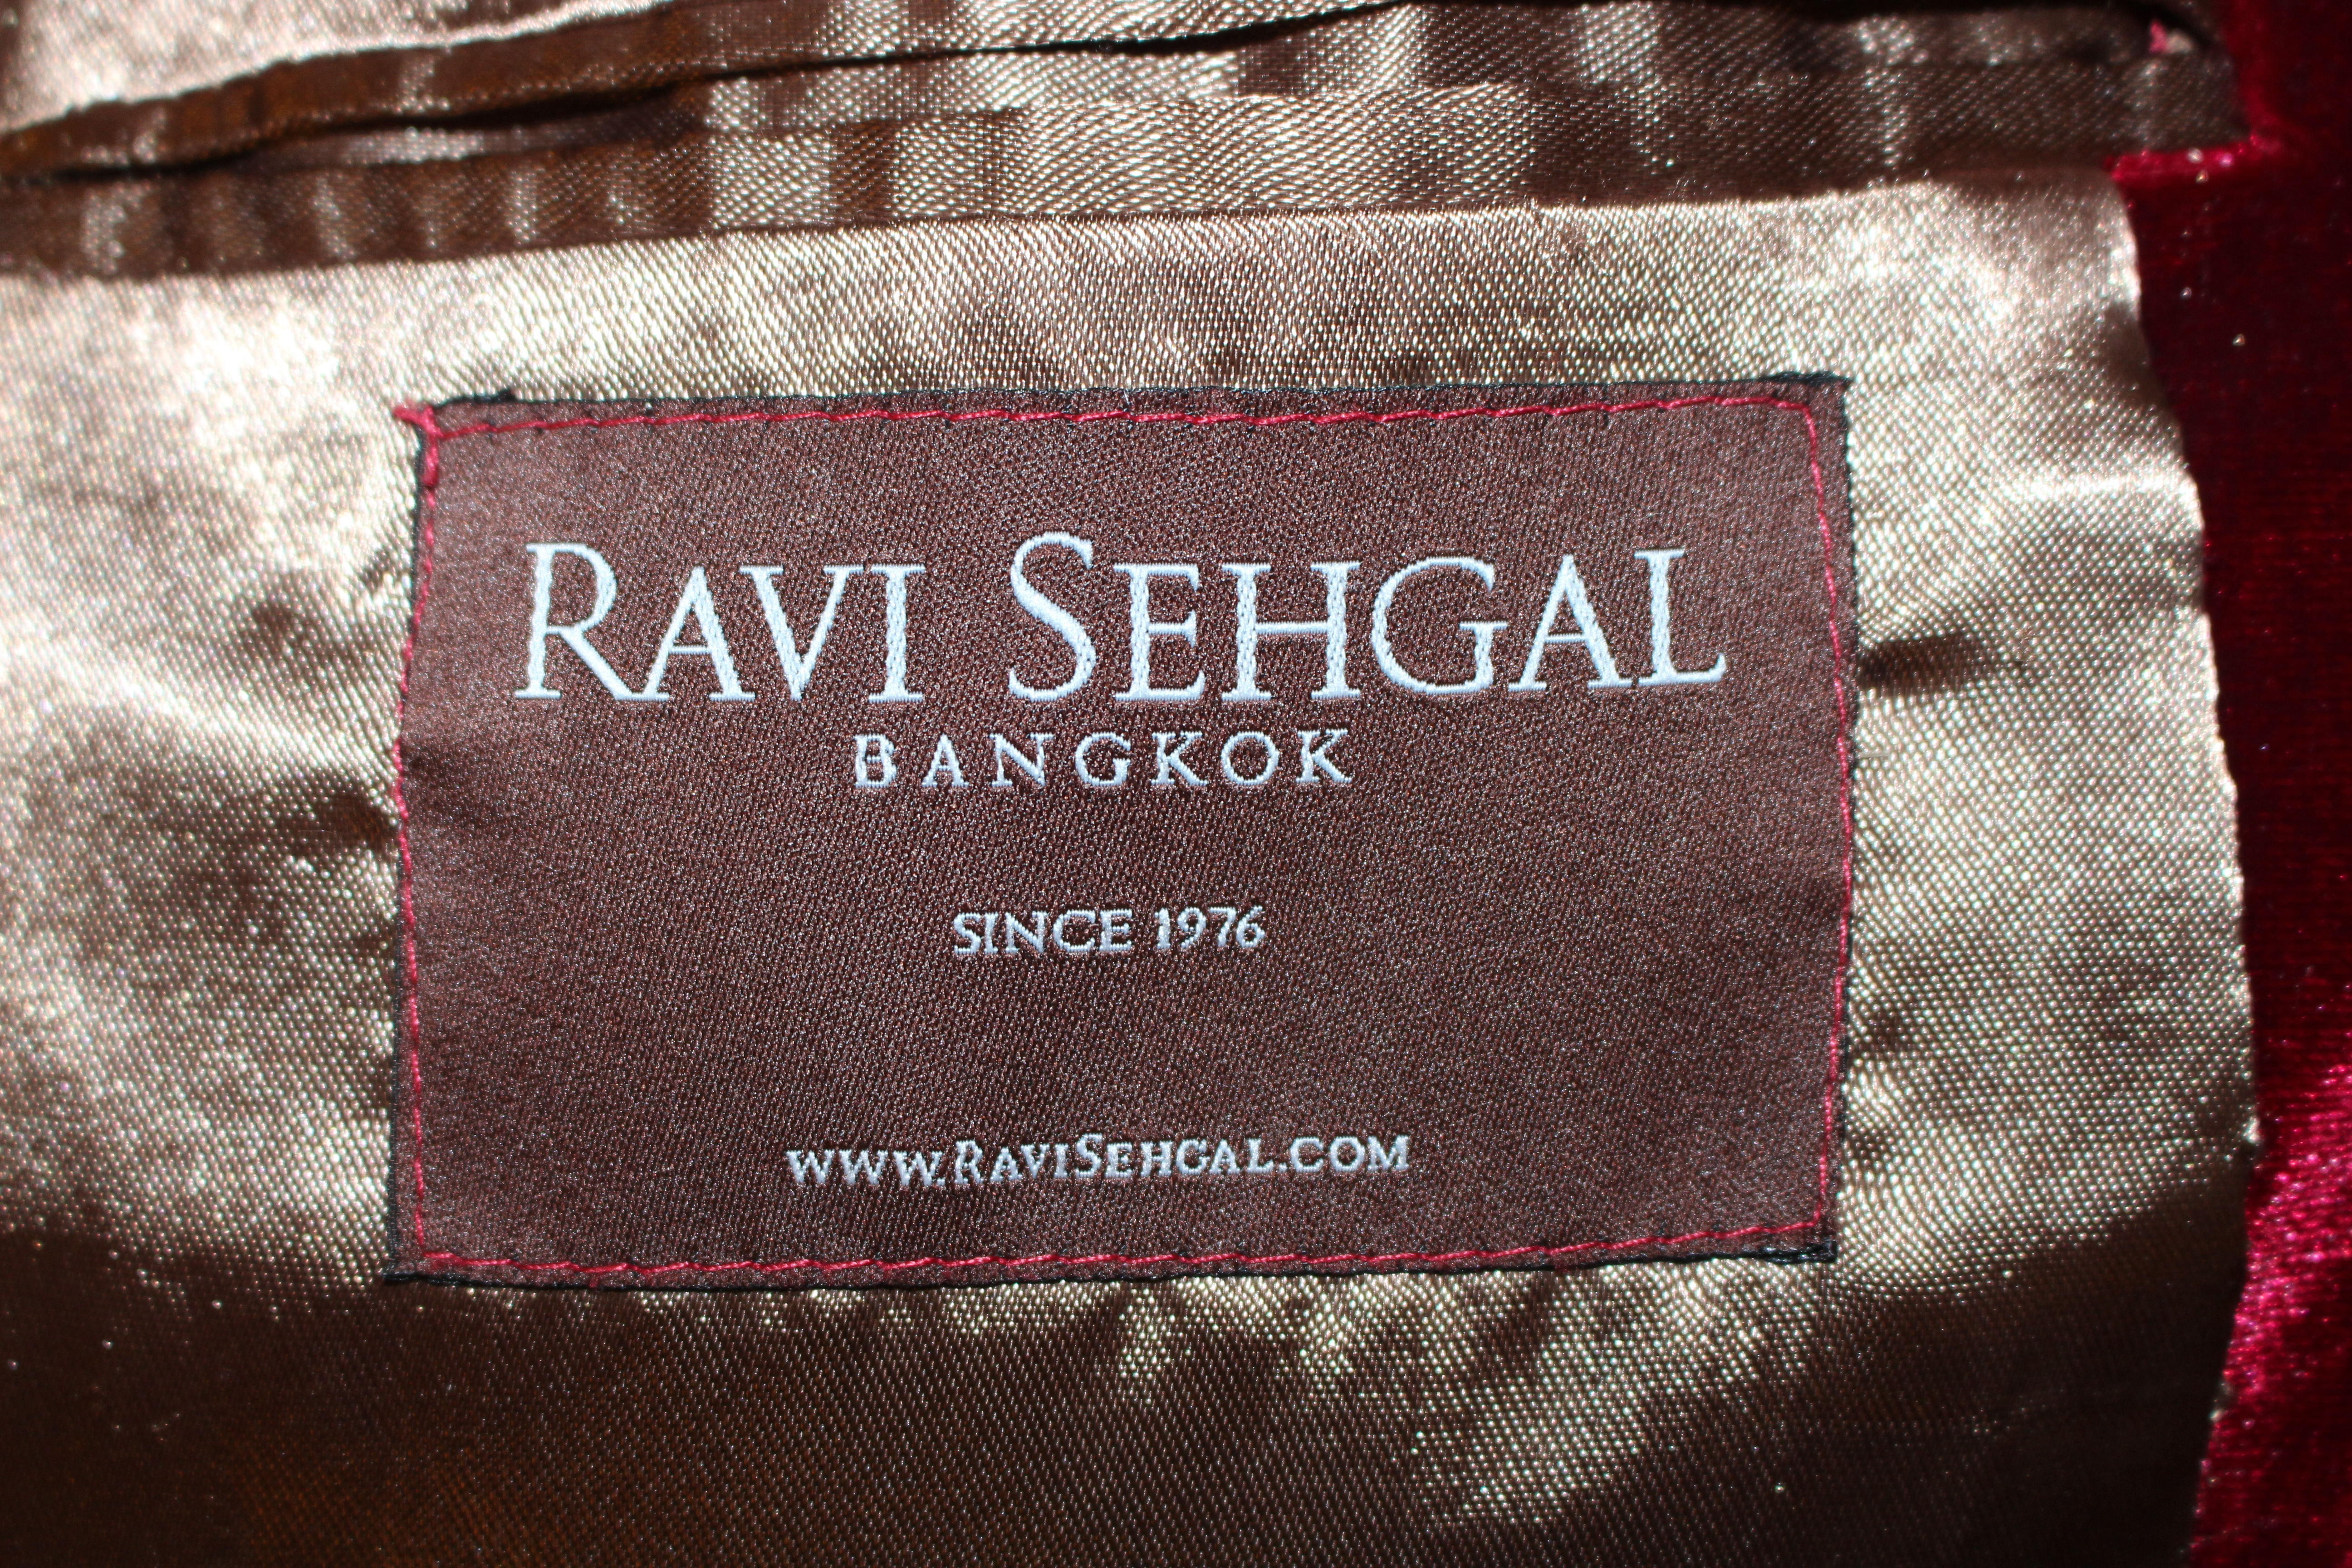 Label of bright red velvet jacket, reading 'Ravi Sehgal, Bangkok, 
since 1976. www.ravisehgal.com'